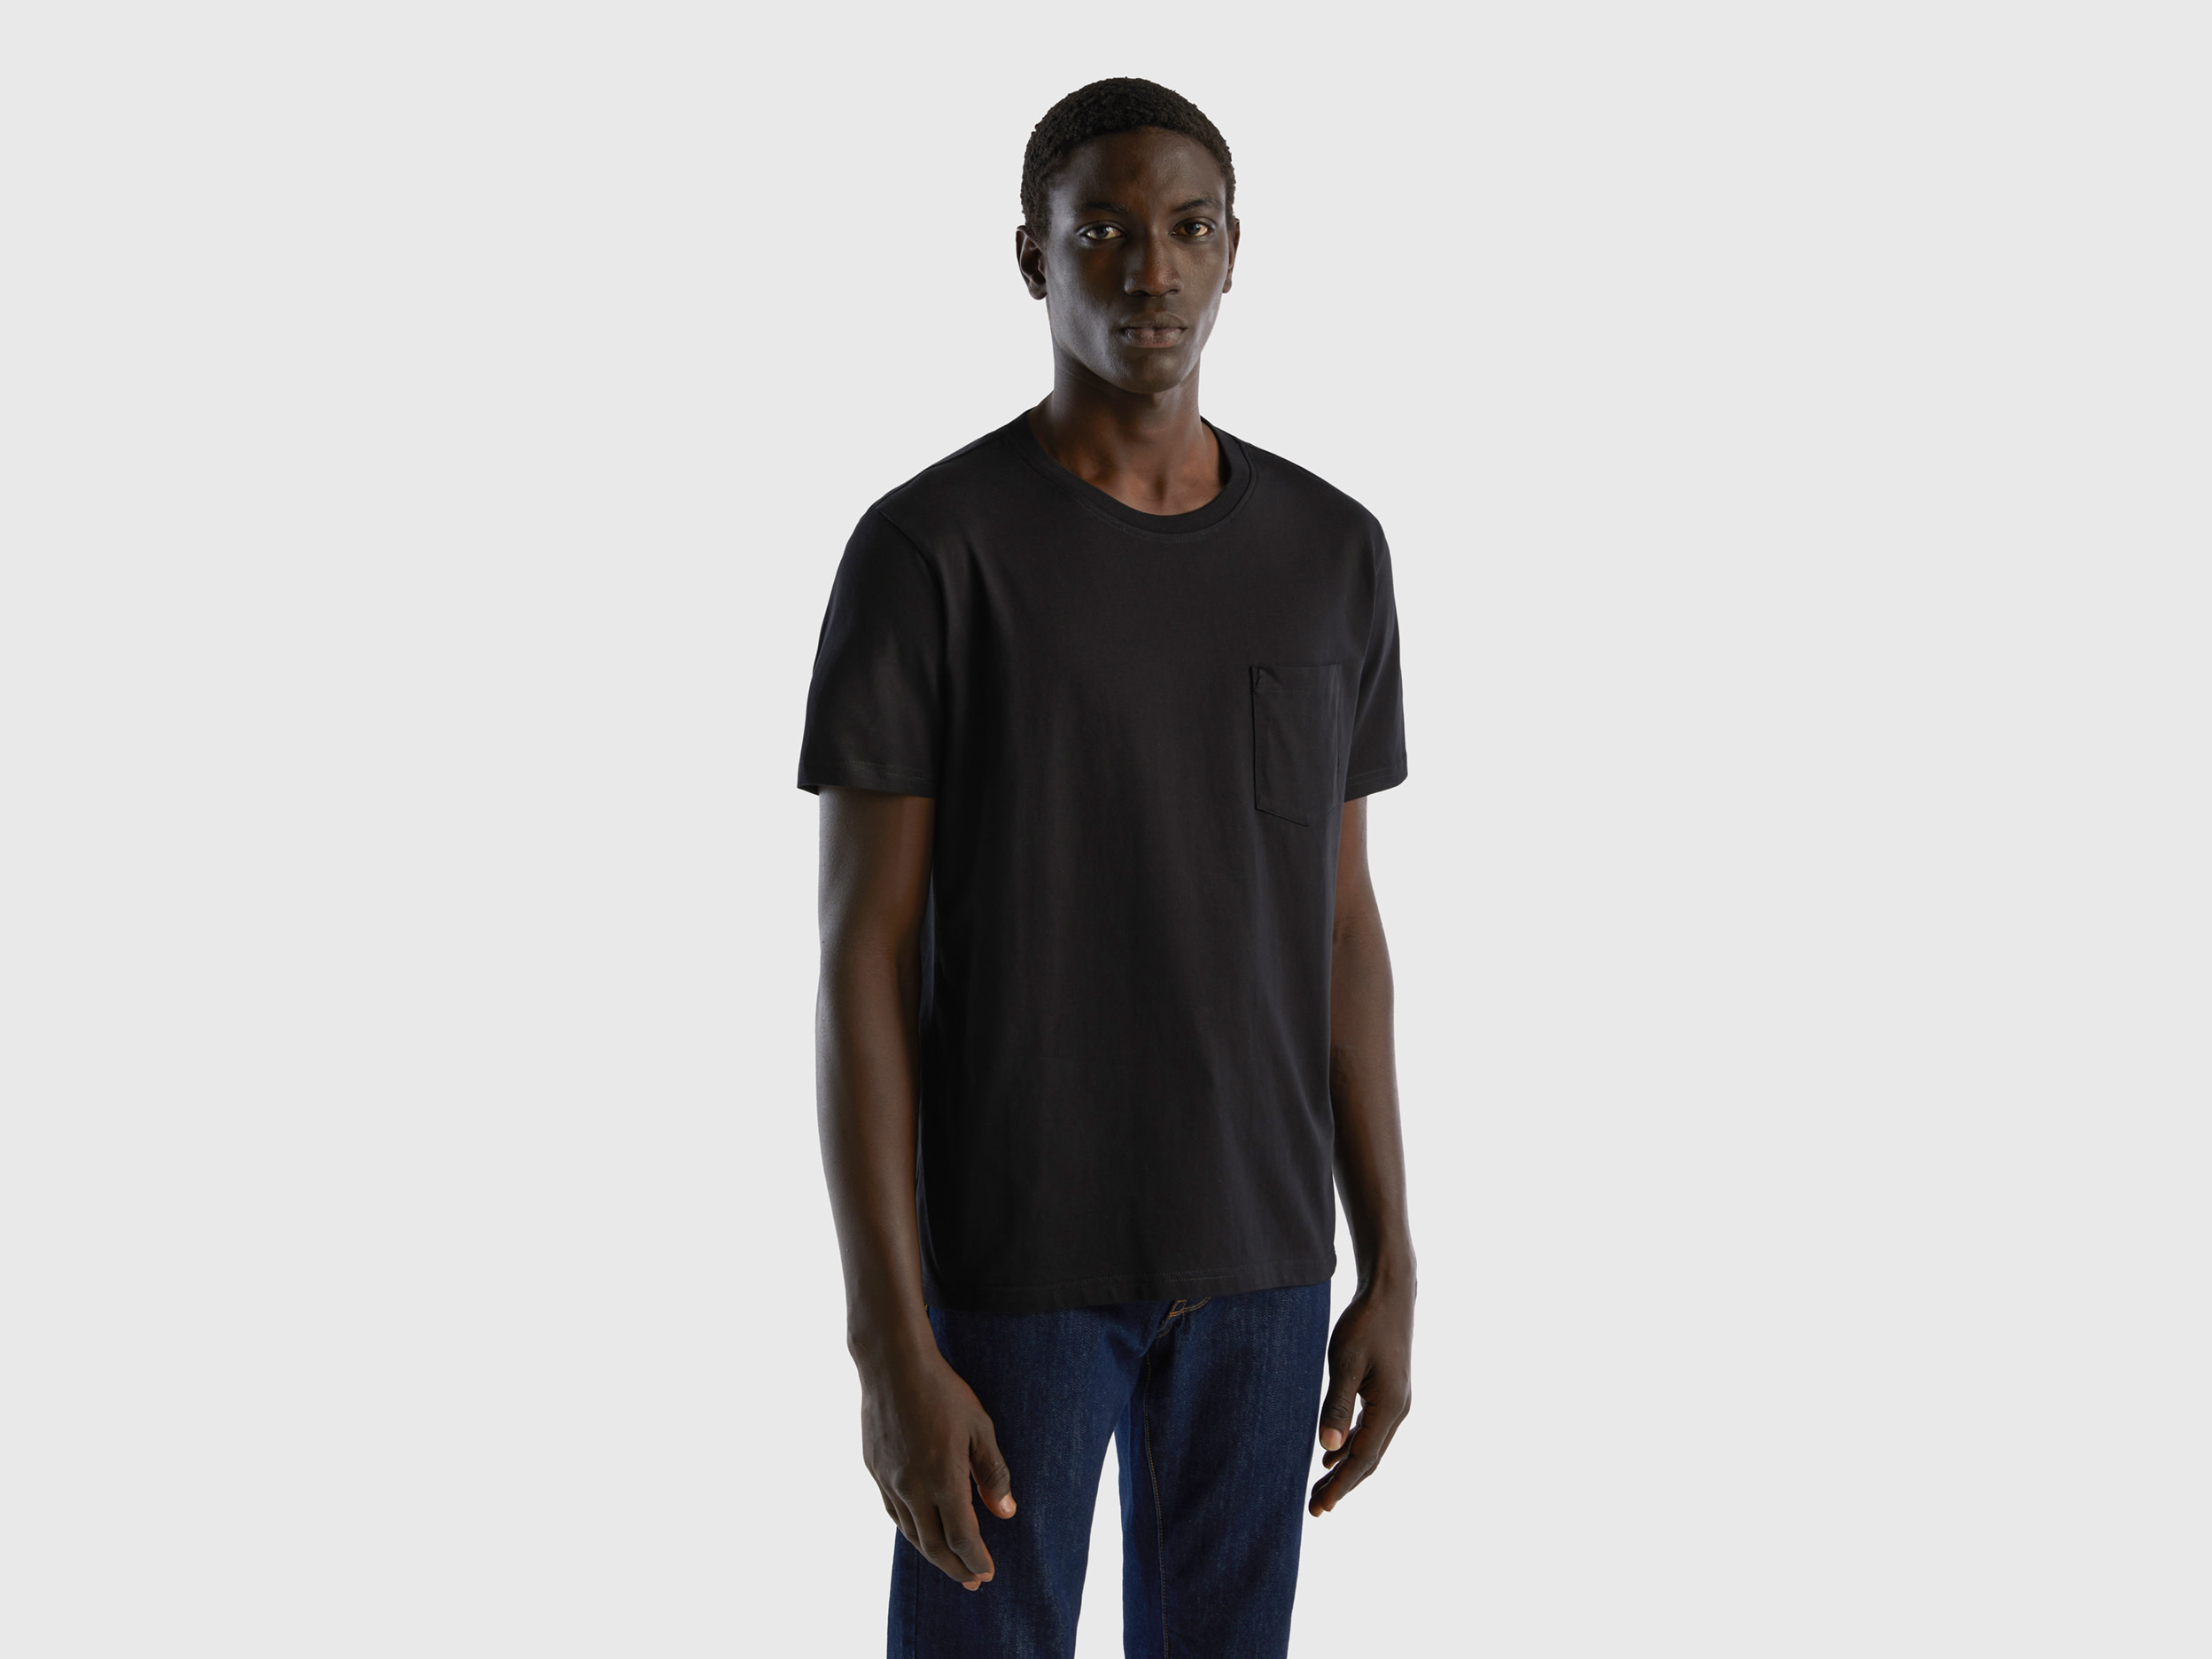 Benetton, 100% Cotton T-shirt With Pocket, size XXXL, Black, Men